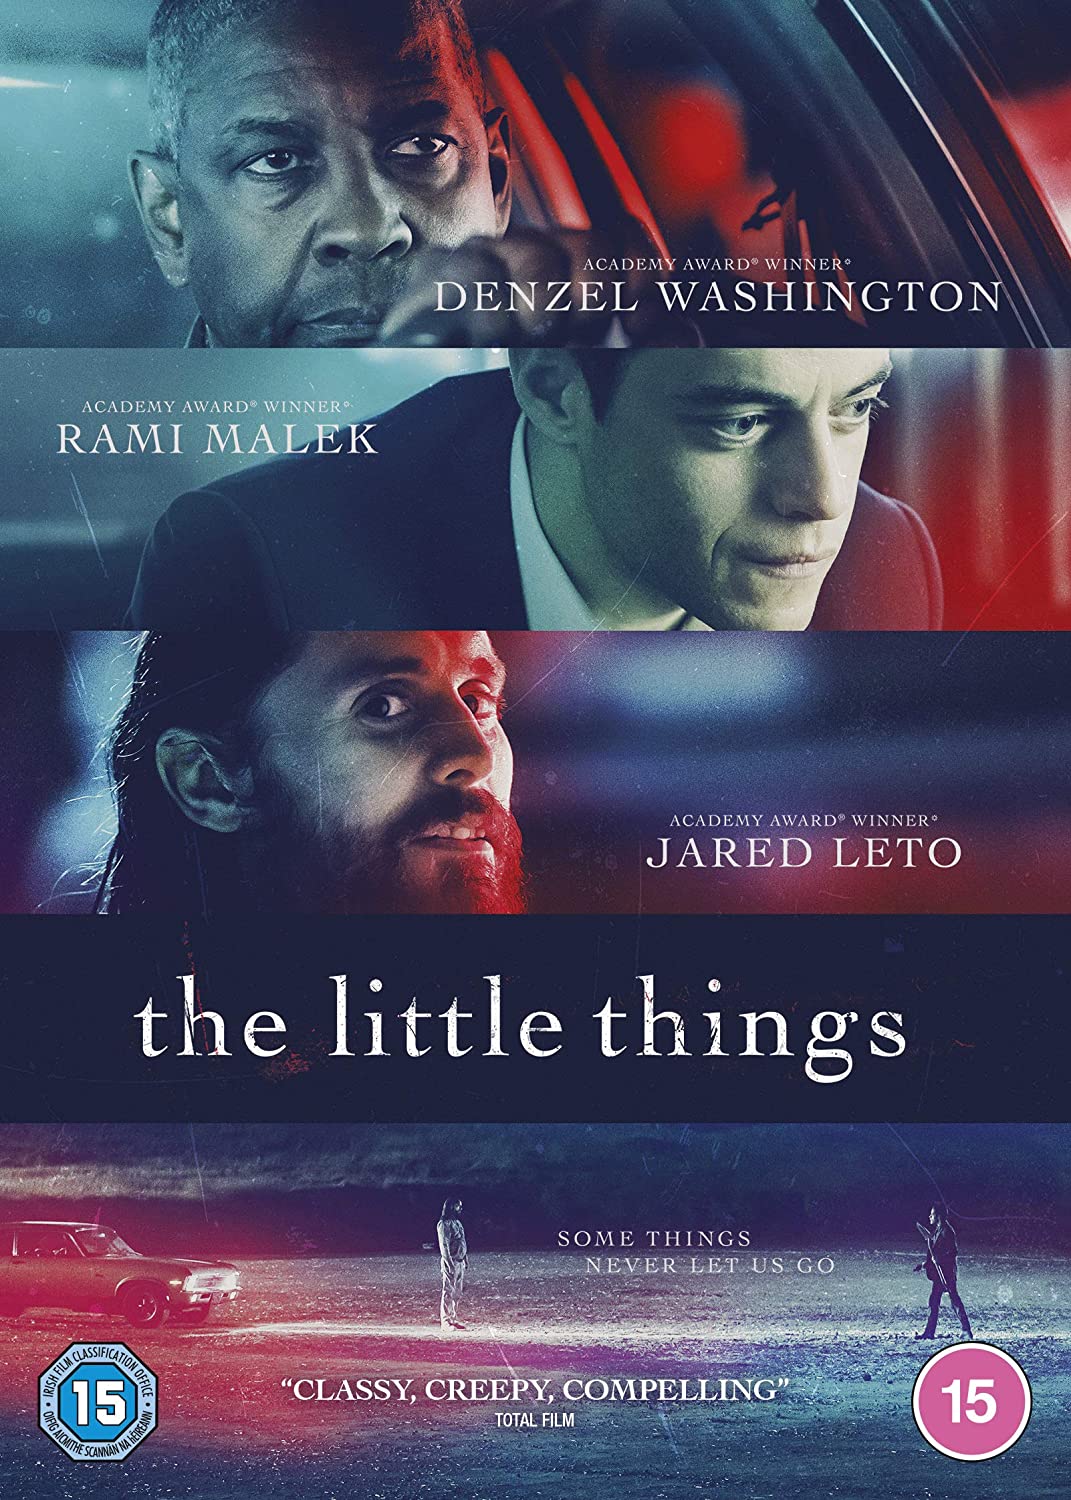 The Little Things [2021] - Thriller/Crime [DVD]